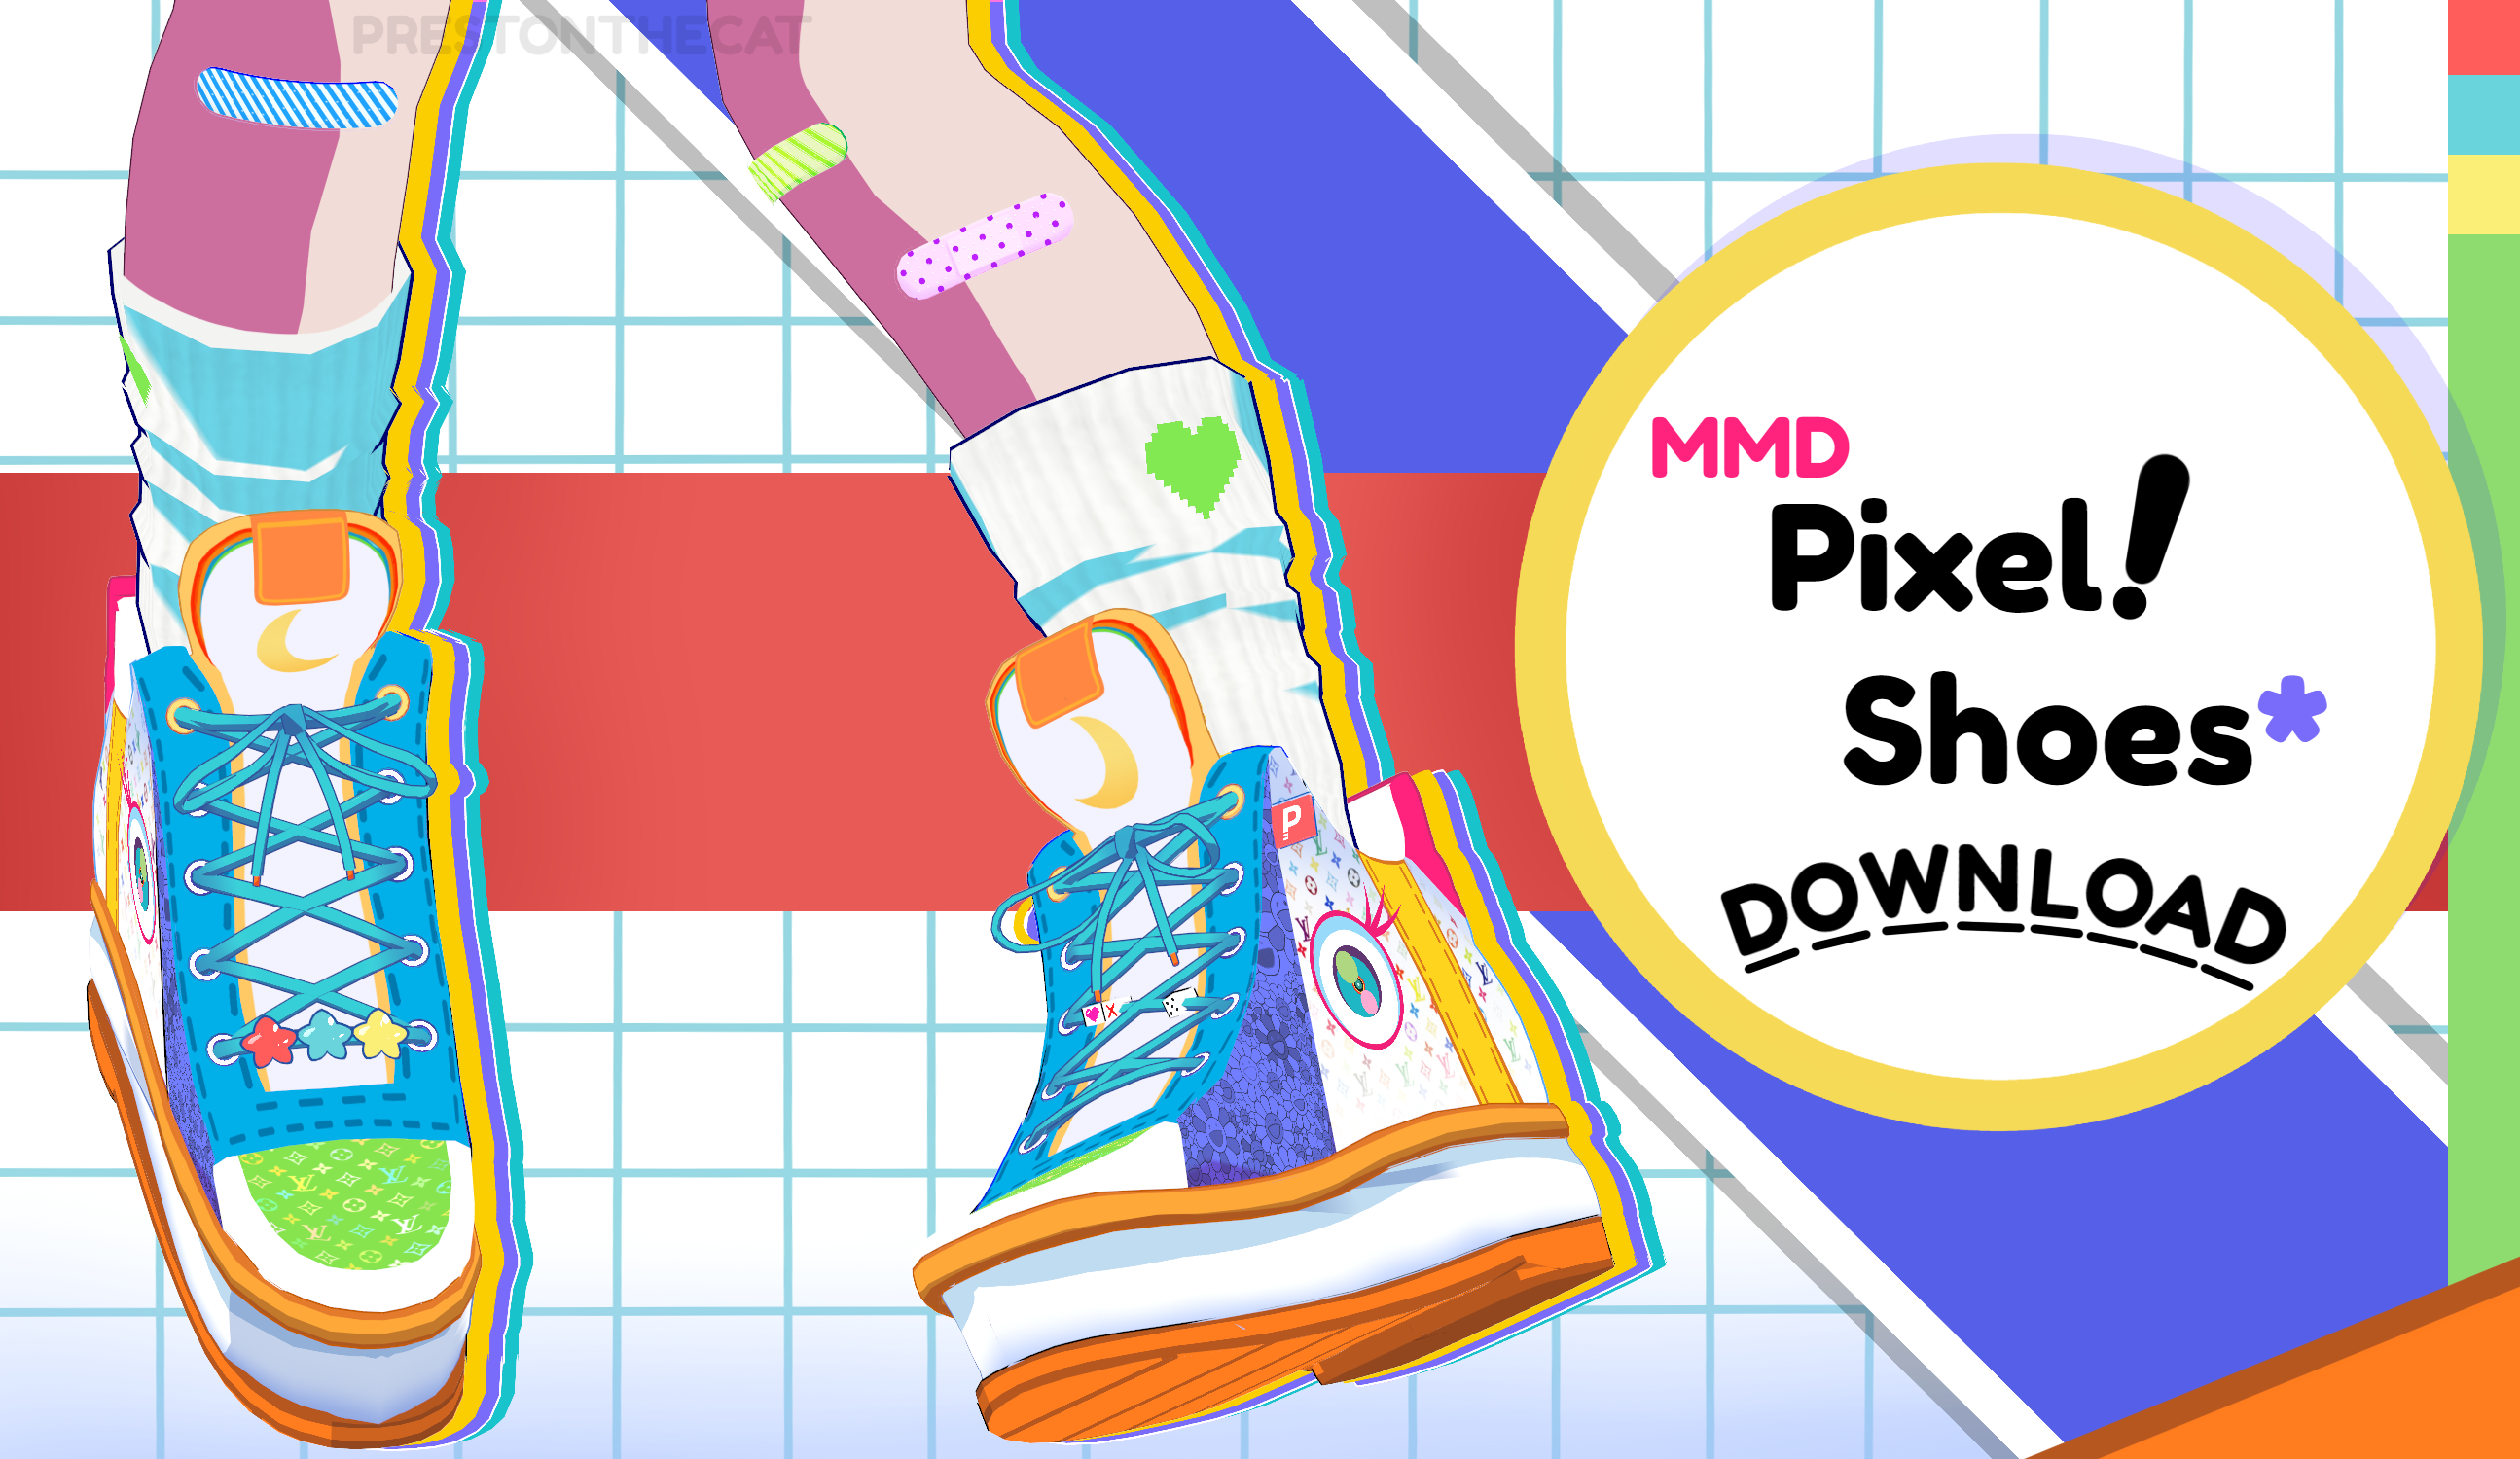 MMD Pixel! Shoes* Download! by PRESTONTHECAT on DeviantArt